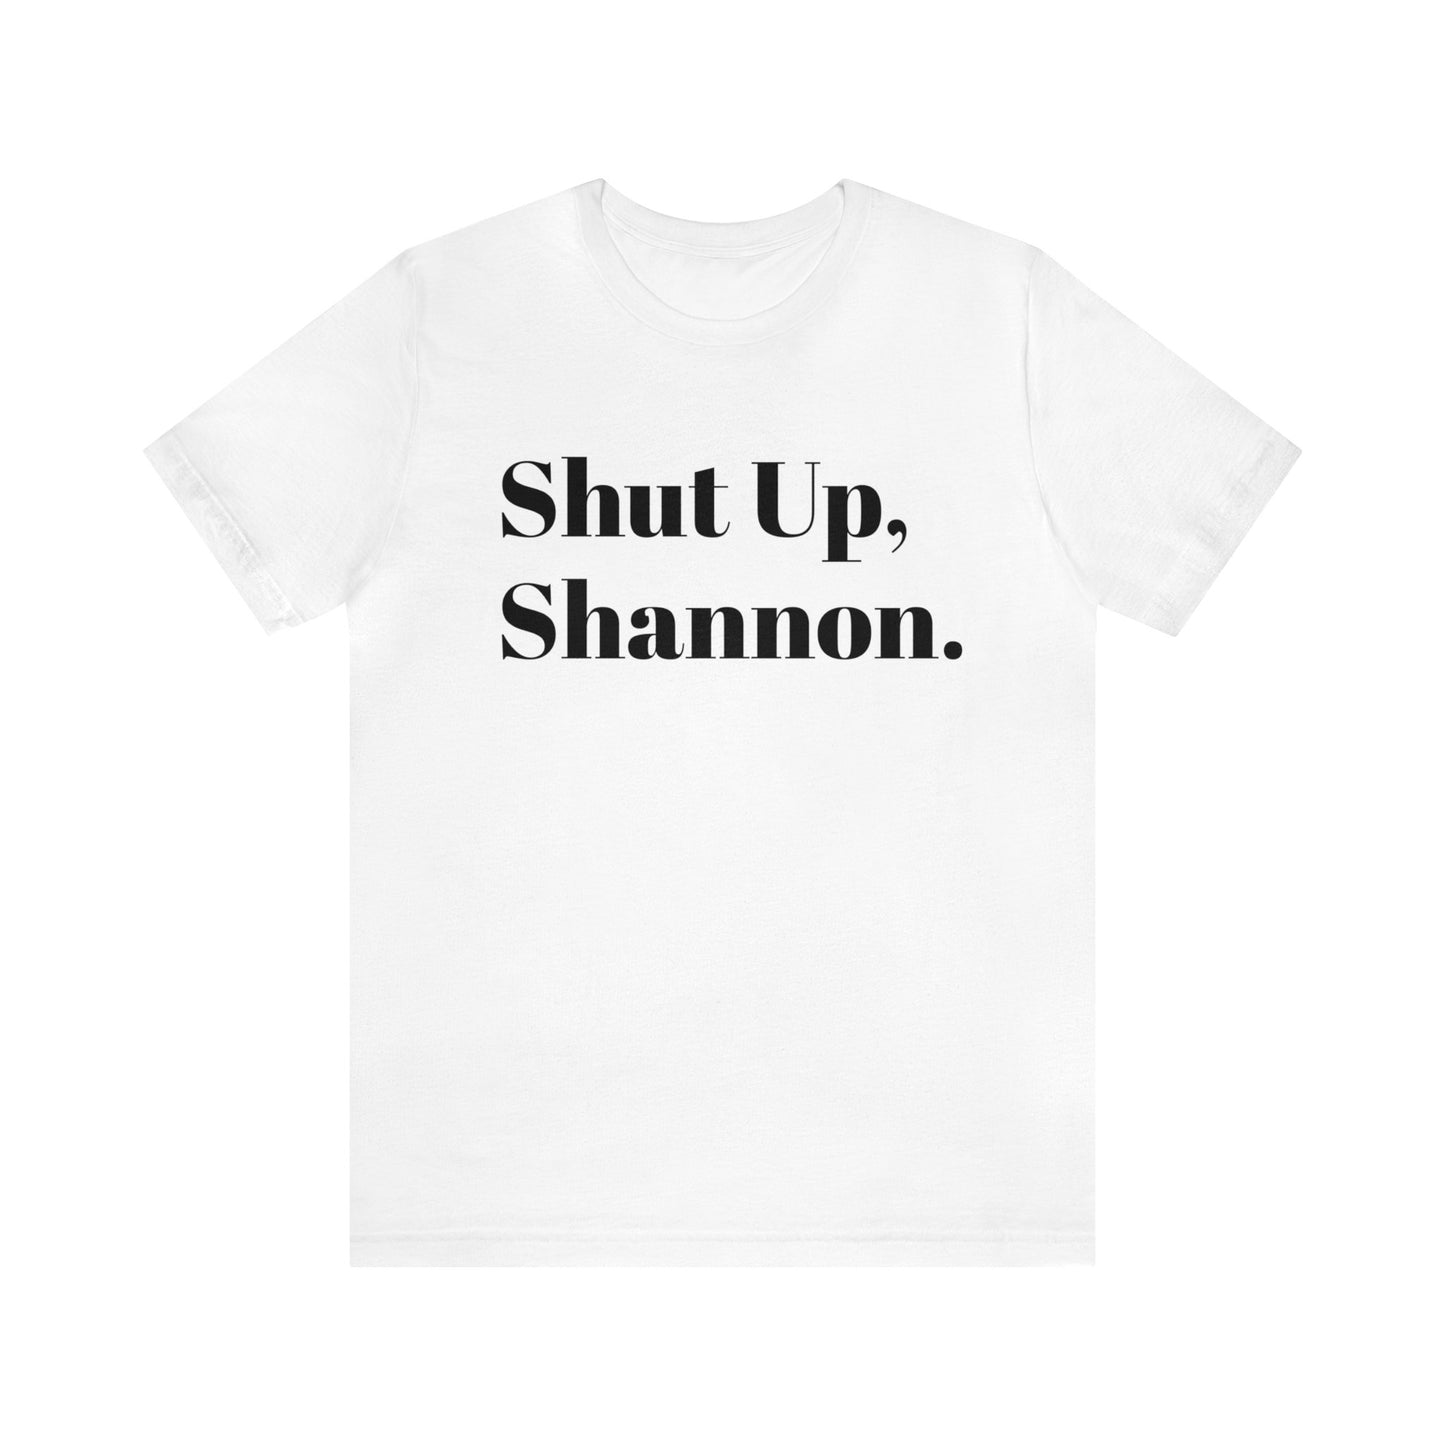 Chrisism No. 2 - Shut up, Shannon.